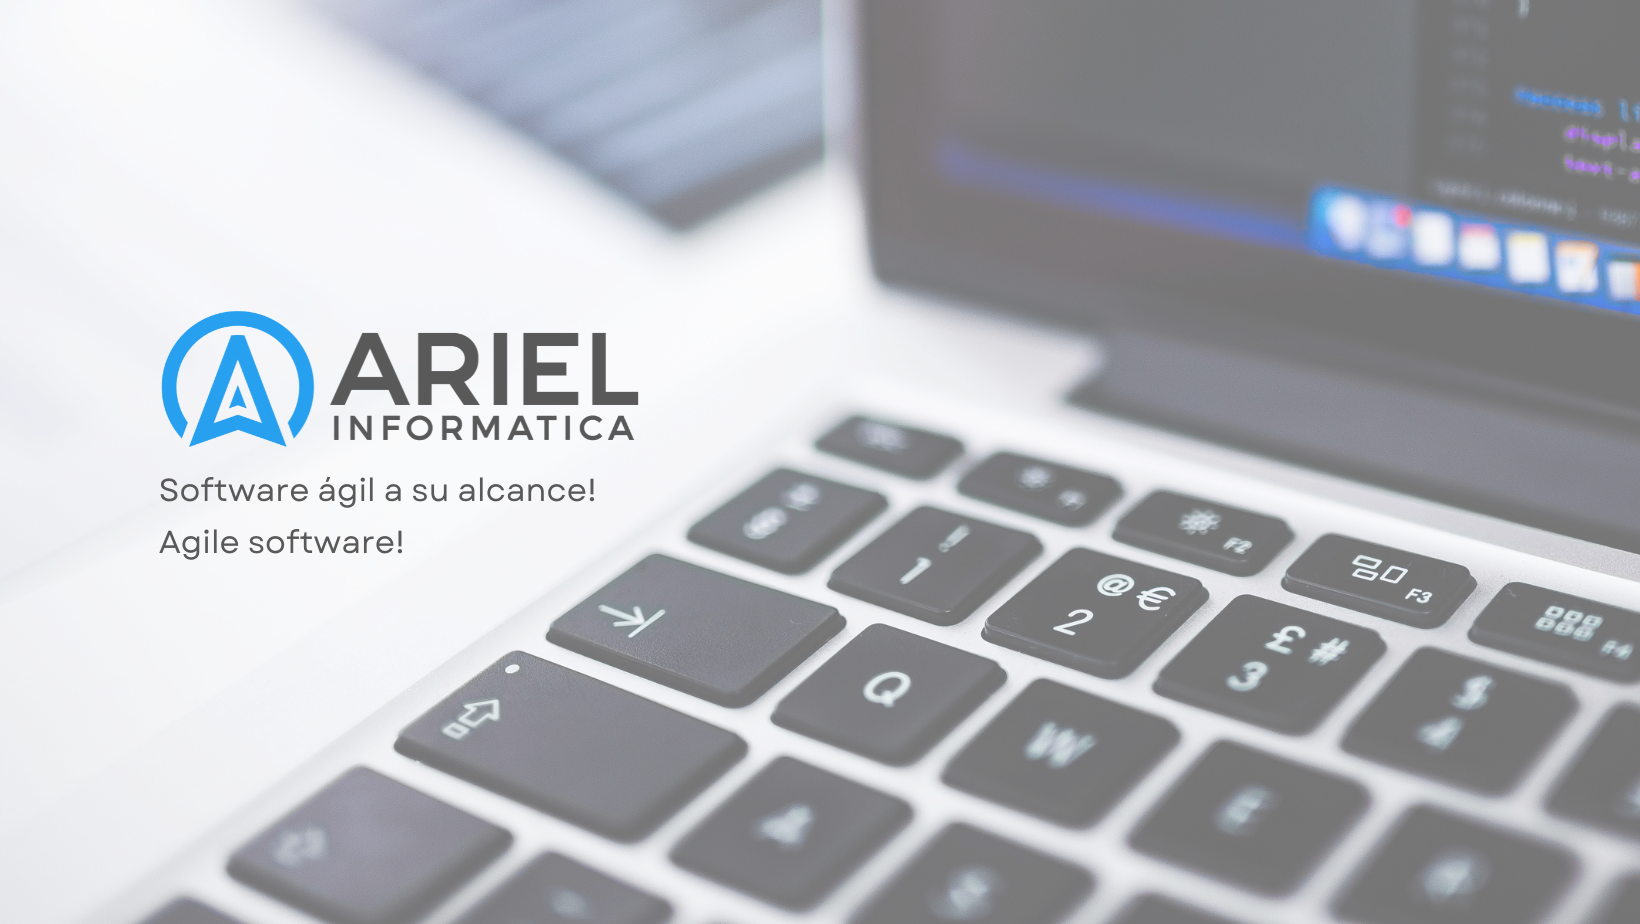 ariel-informatica-new-logo-background